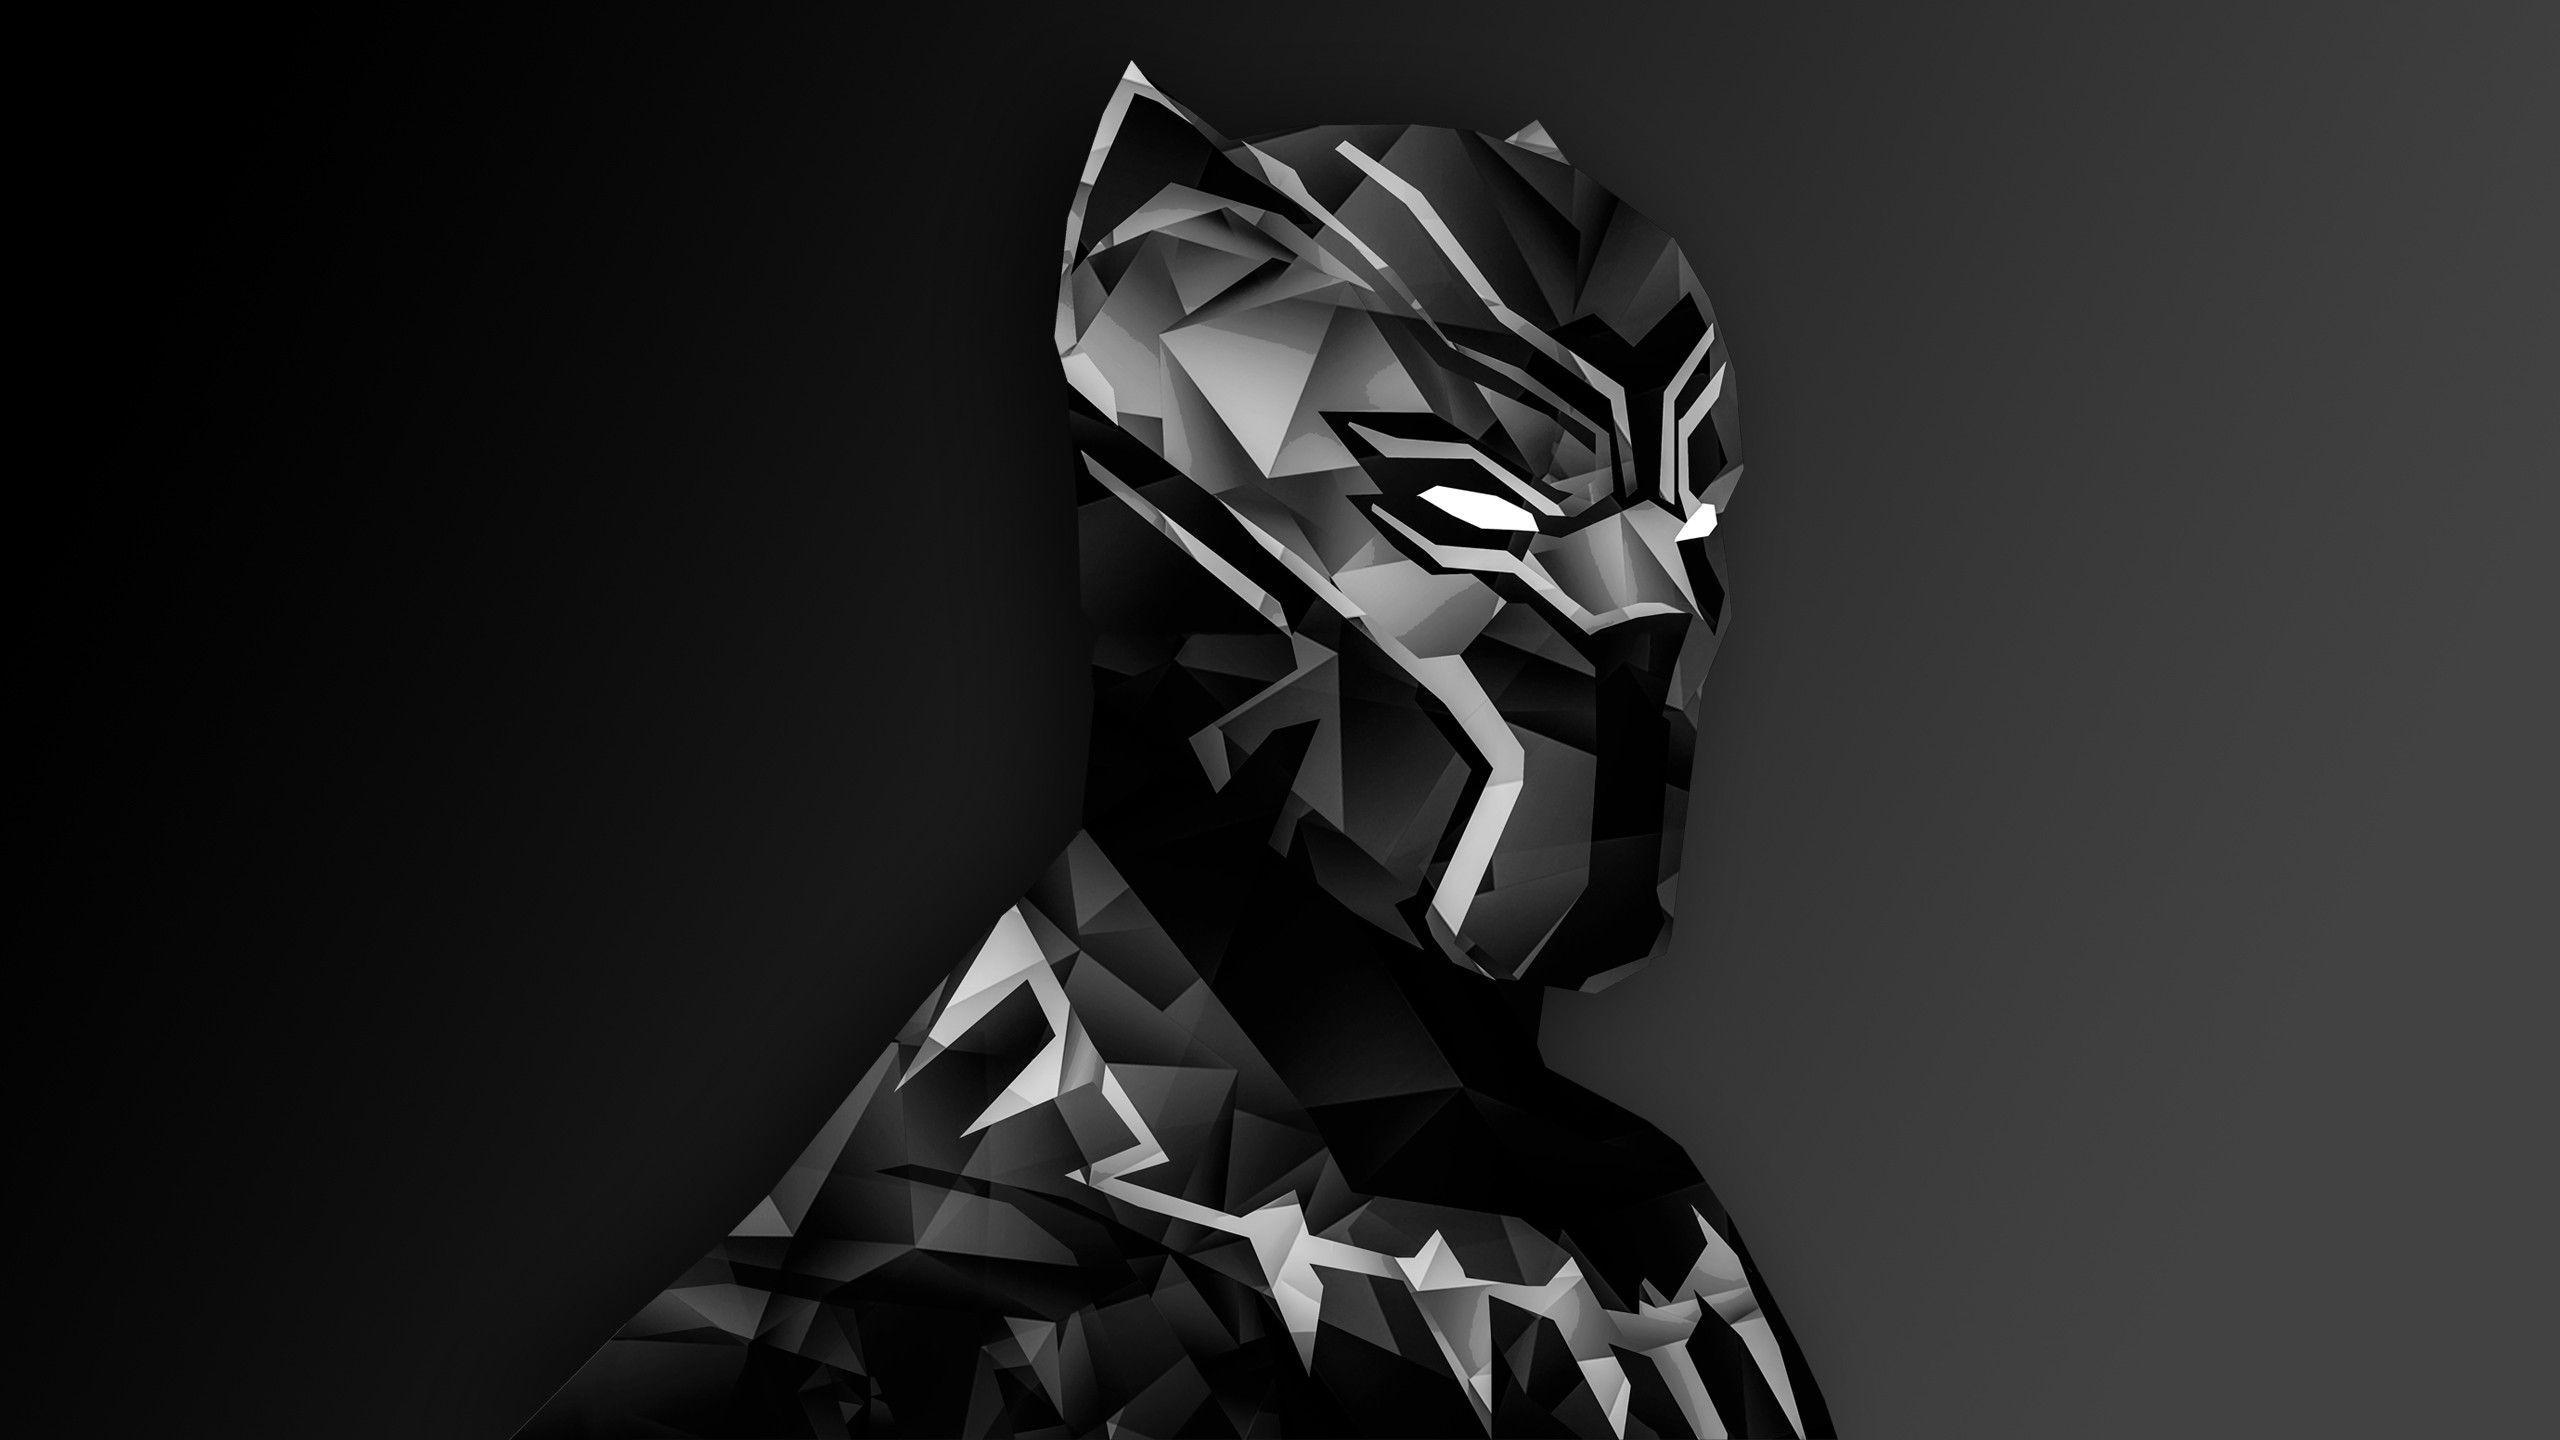 2560 x 1440 · jpeg - Black Panther Logo Wallpapers - Wallpaper Cave